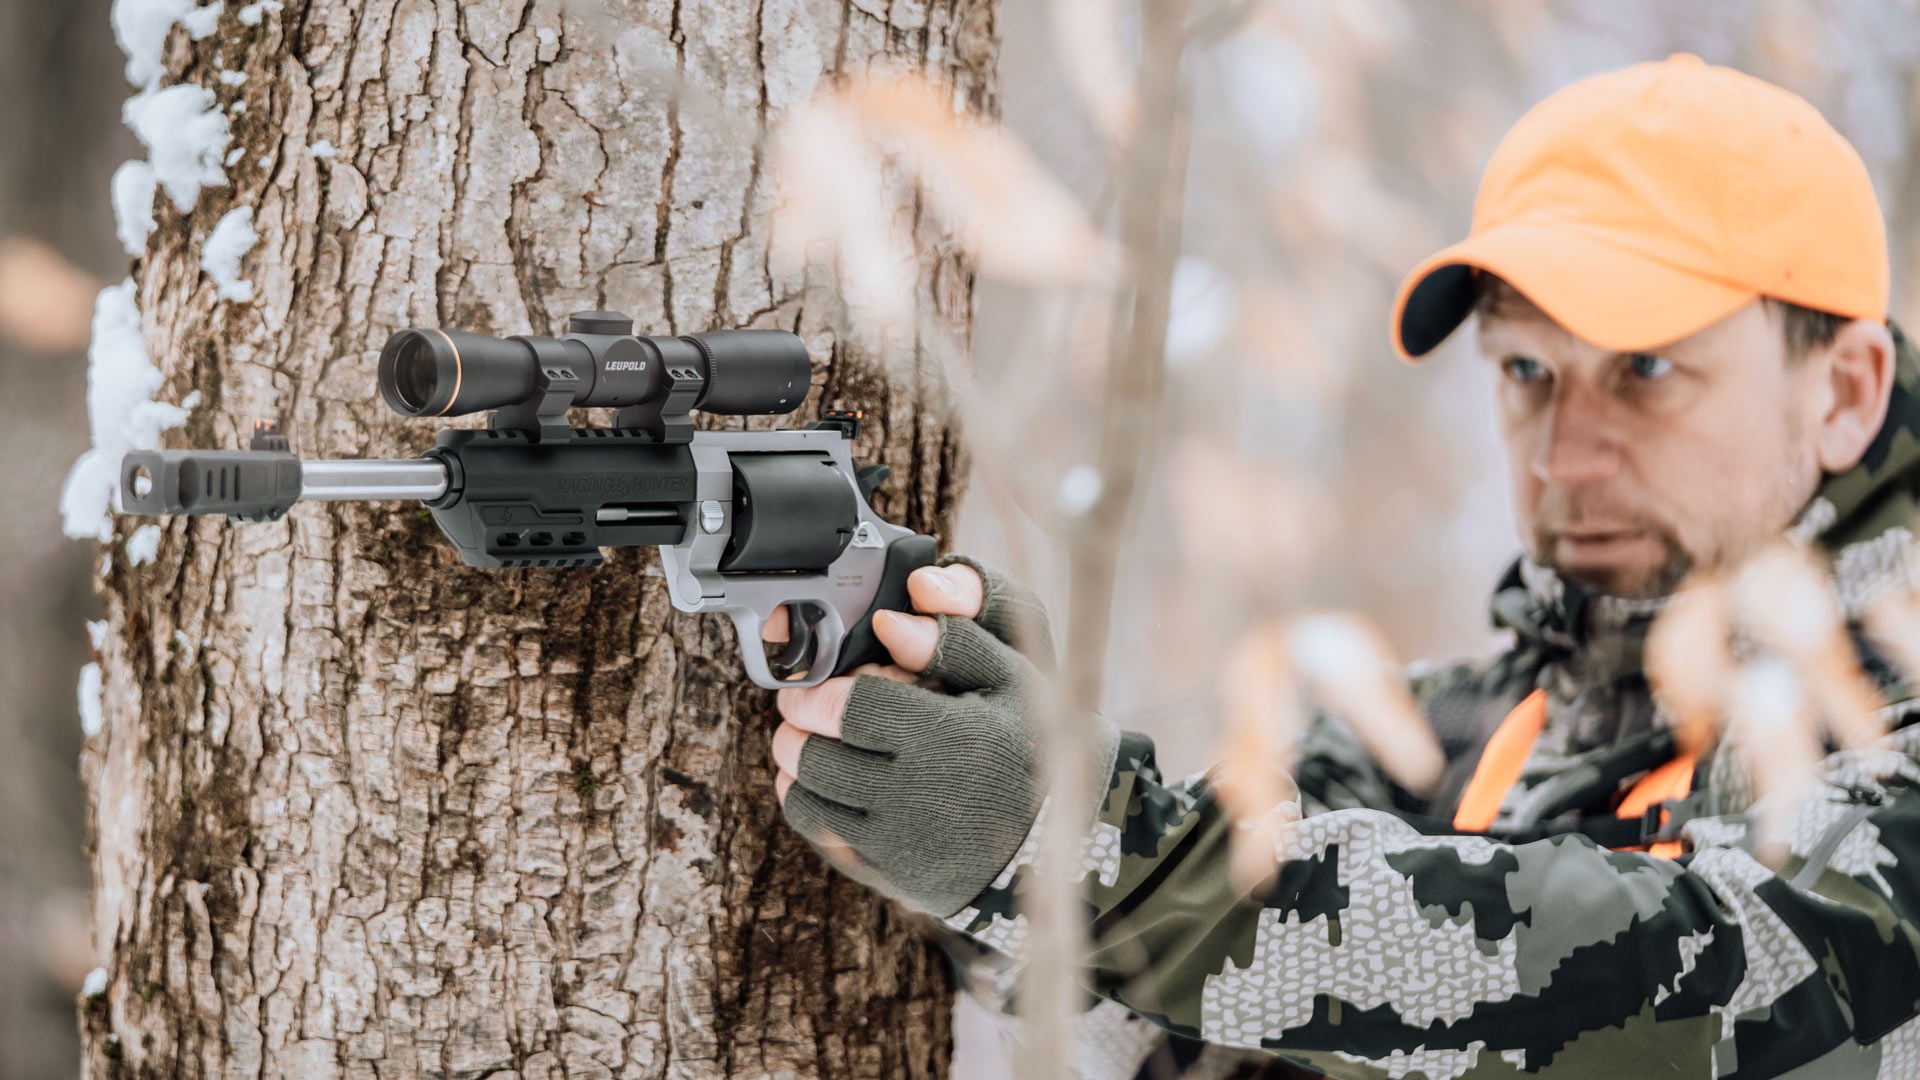 Taurus RH460 revolver outdoors tree snow man hunter shooting target hunting